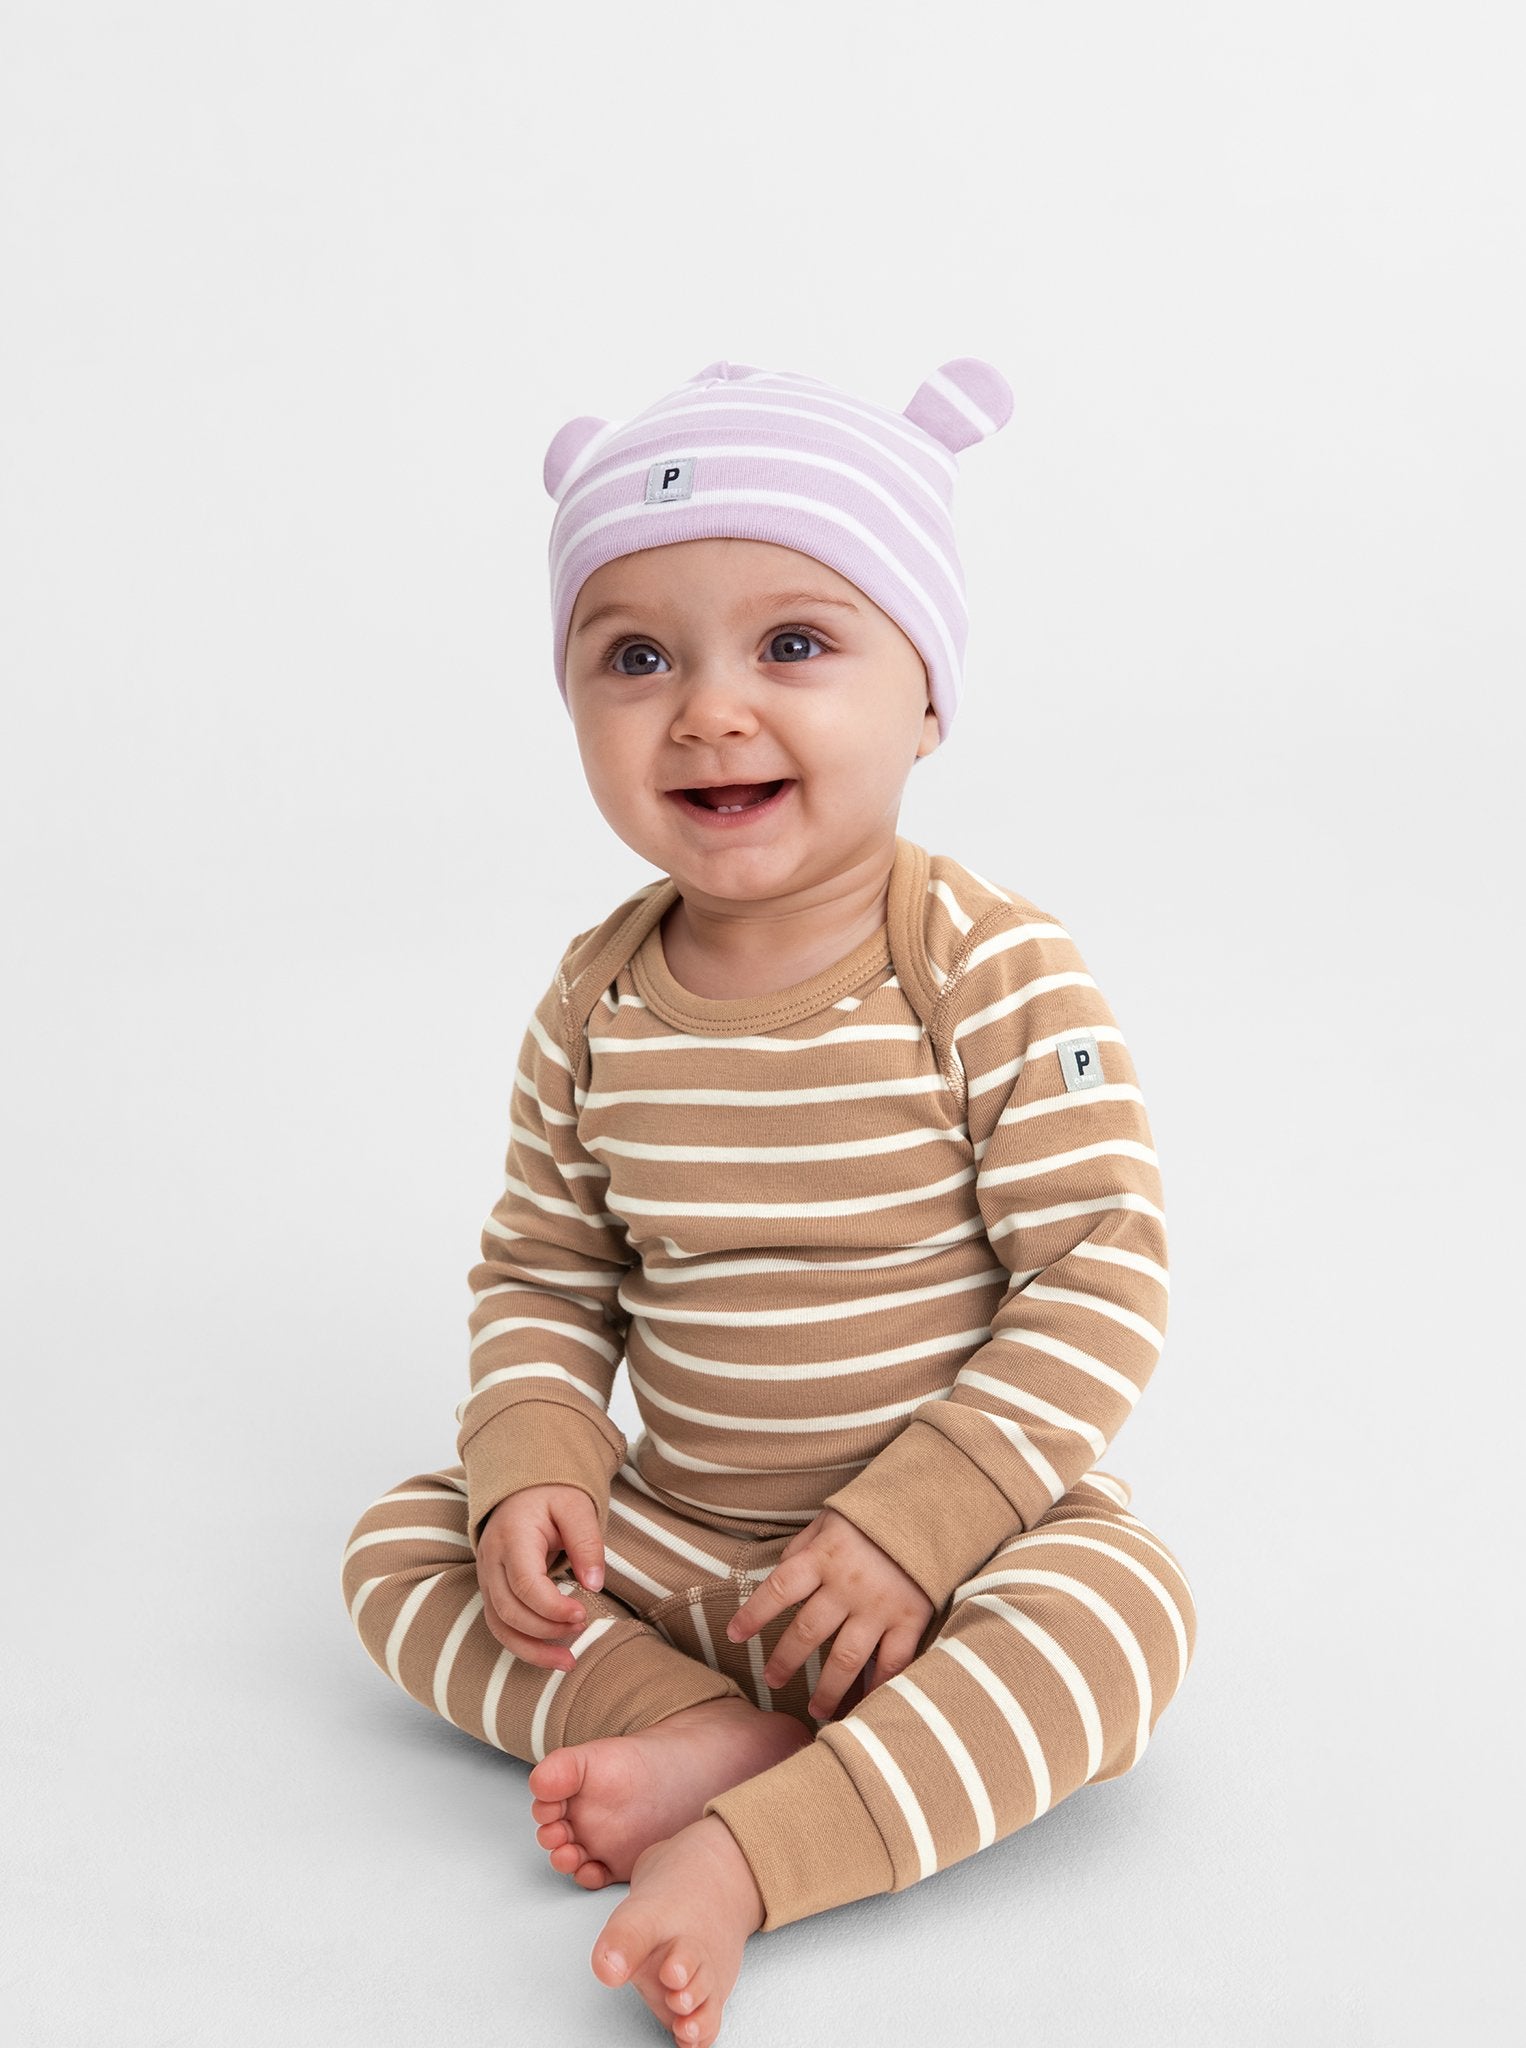  Organic Striped Brown Babygrow from Polarn O. Pyret Kidswear. Made with 100% organic cotton.